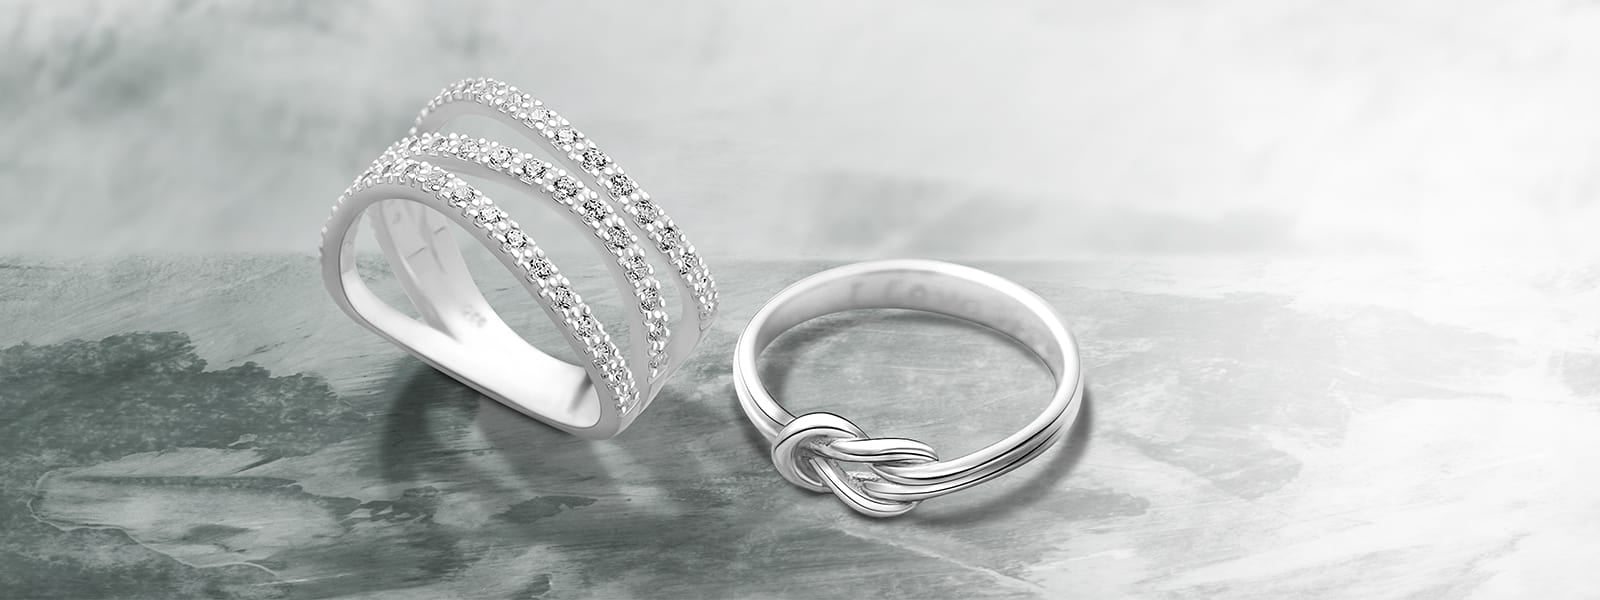 Mare Nubium engagement ring - lunar inspired wedding ring